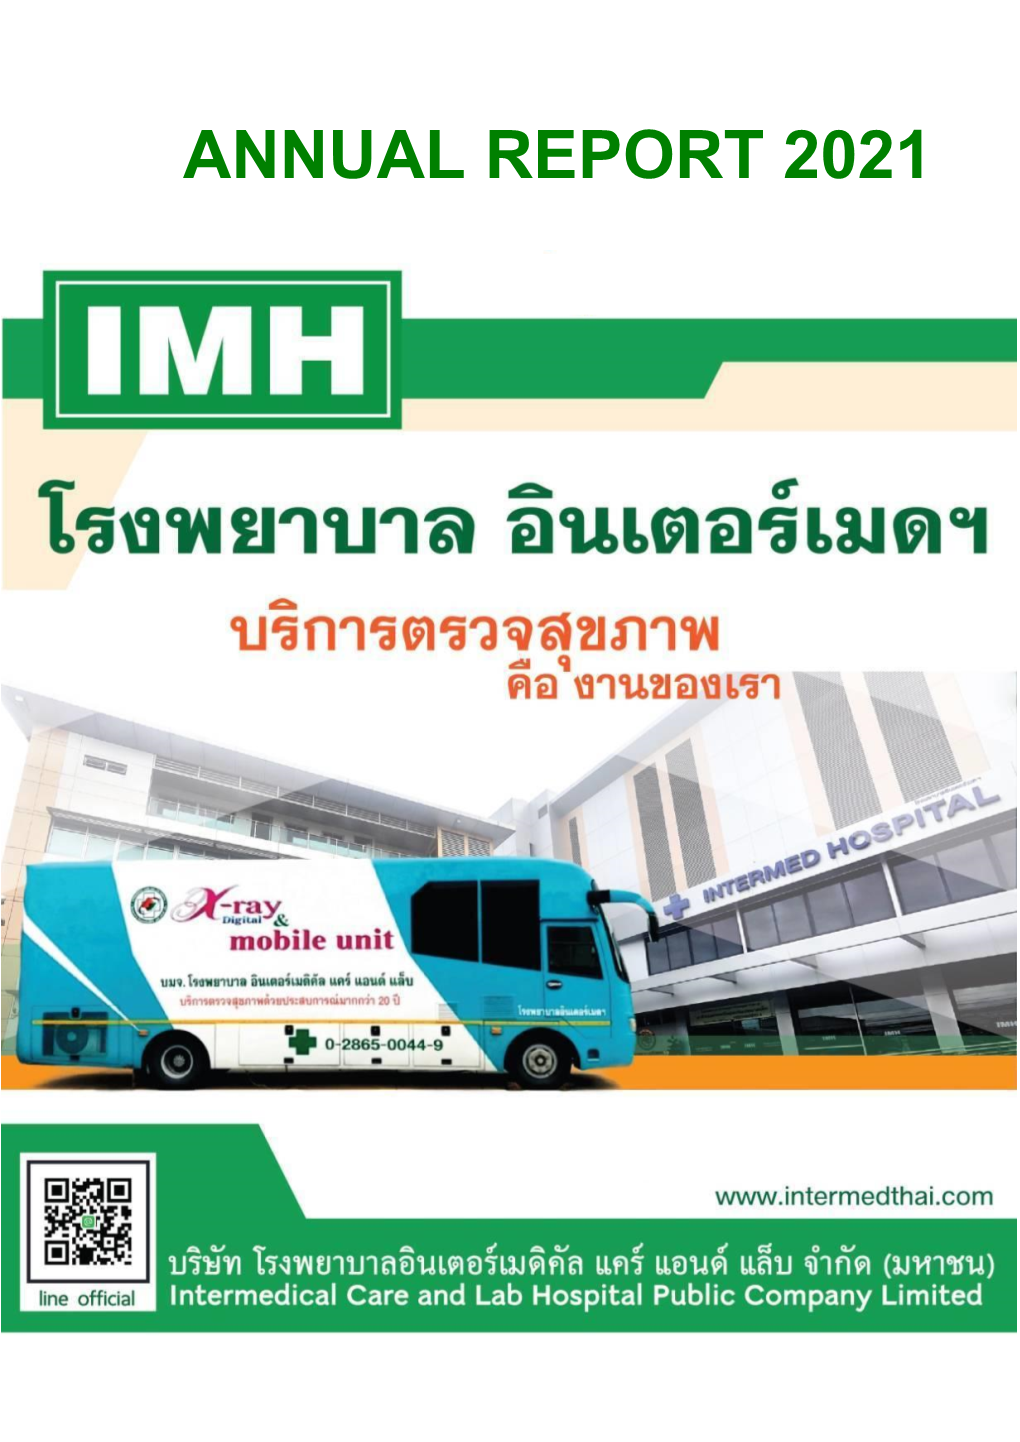 ANNUAL REPORT 2021 (HEAD OFFICE) INTERMEDICAL CARE and LAB HOSPITAL PUBLIC COMPANY LIMITED 442 Bangwaek Rd., Bangwaek, Phasi Charoen, Bangkok 10160 Tel